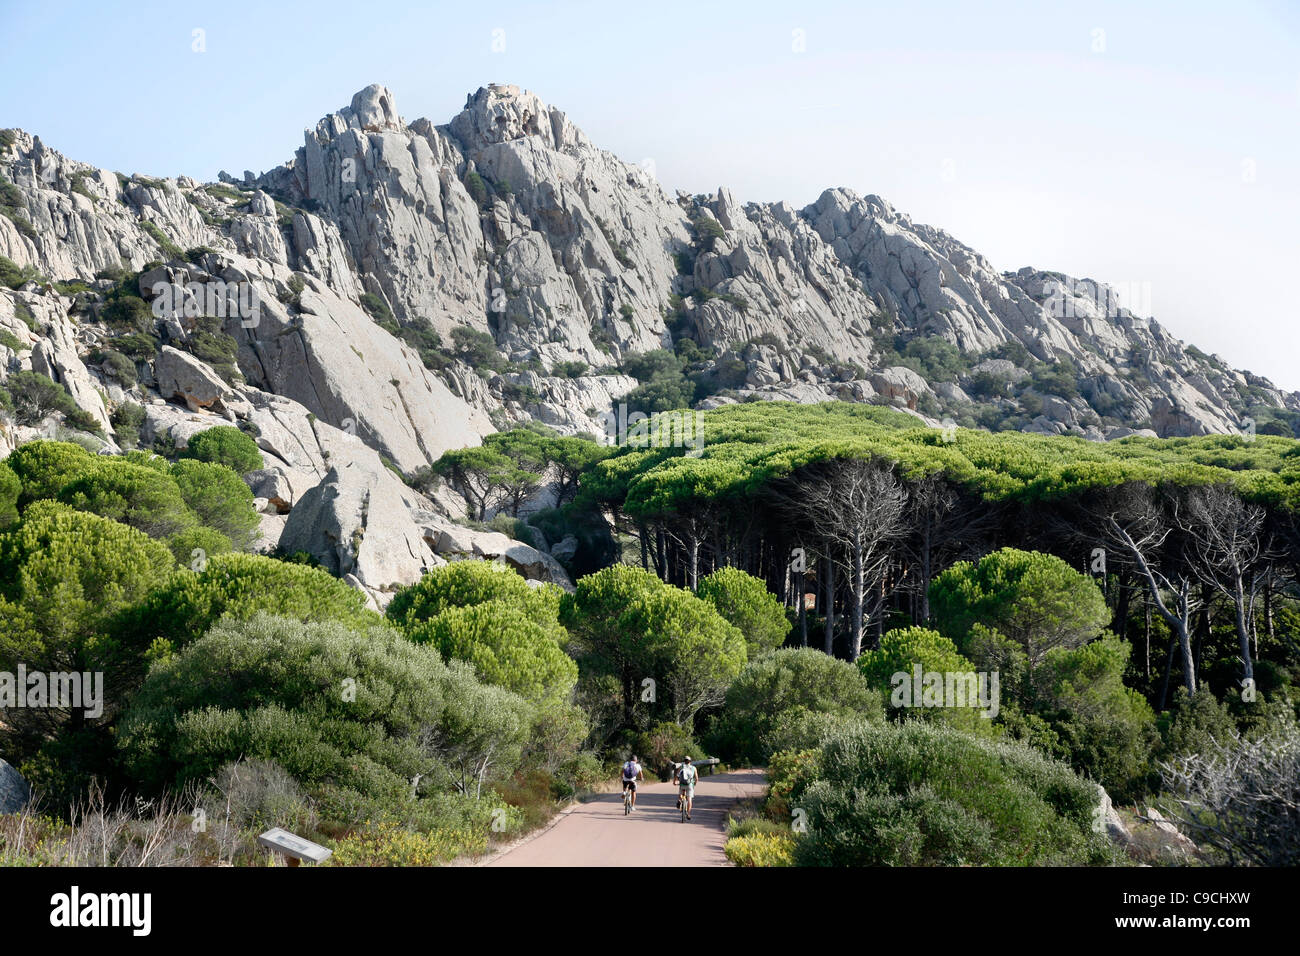 Rochers de granit de La Maddalena, en Sardaigne, Italie. Banque D'Images